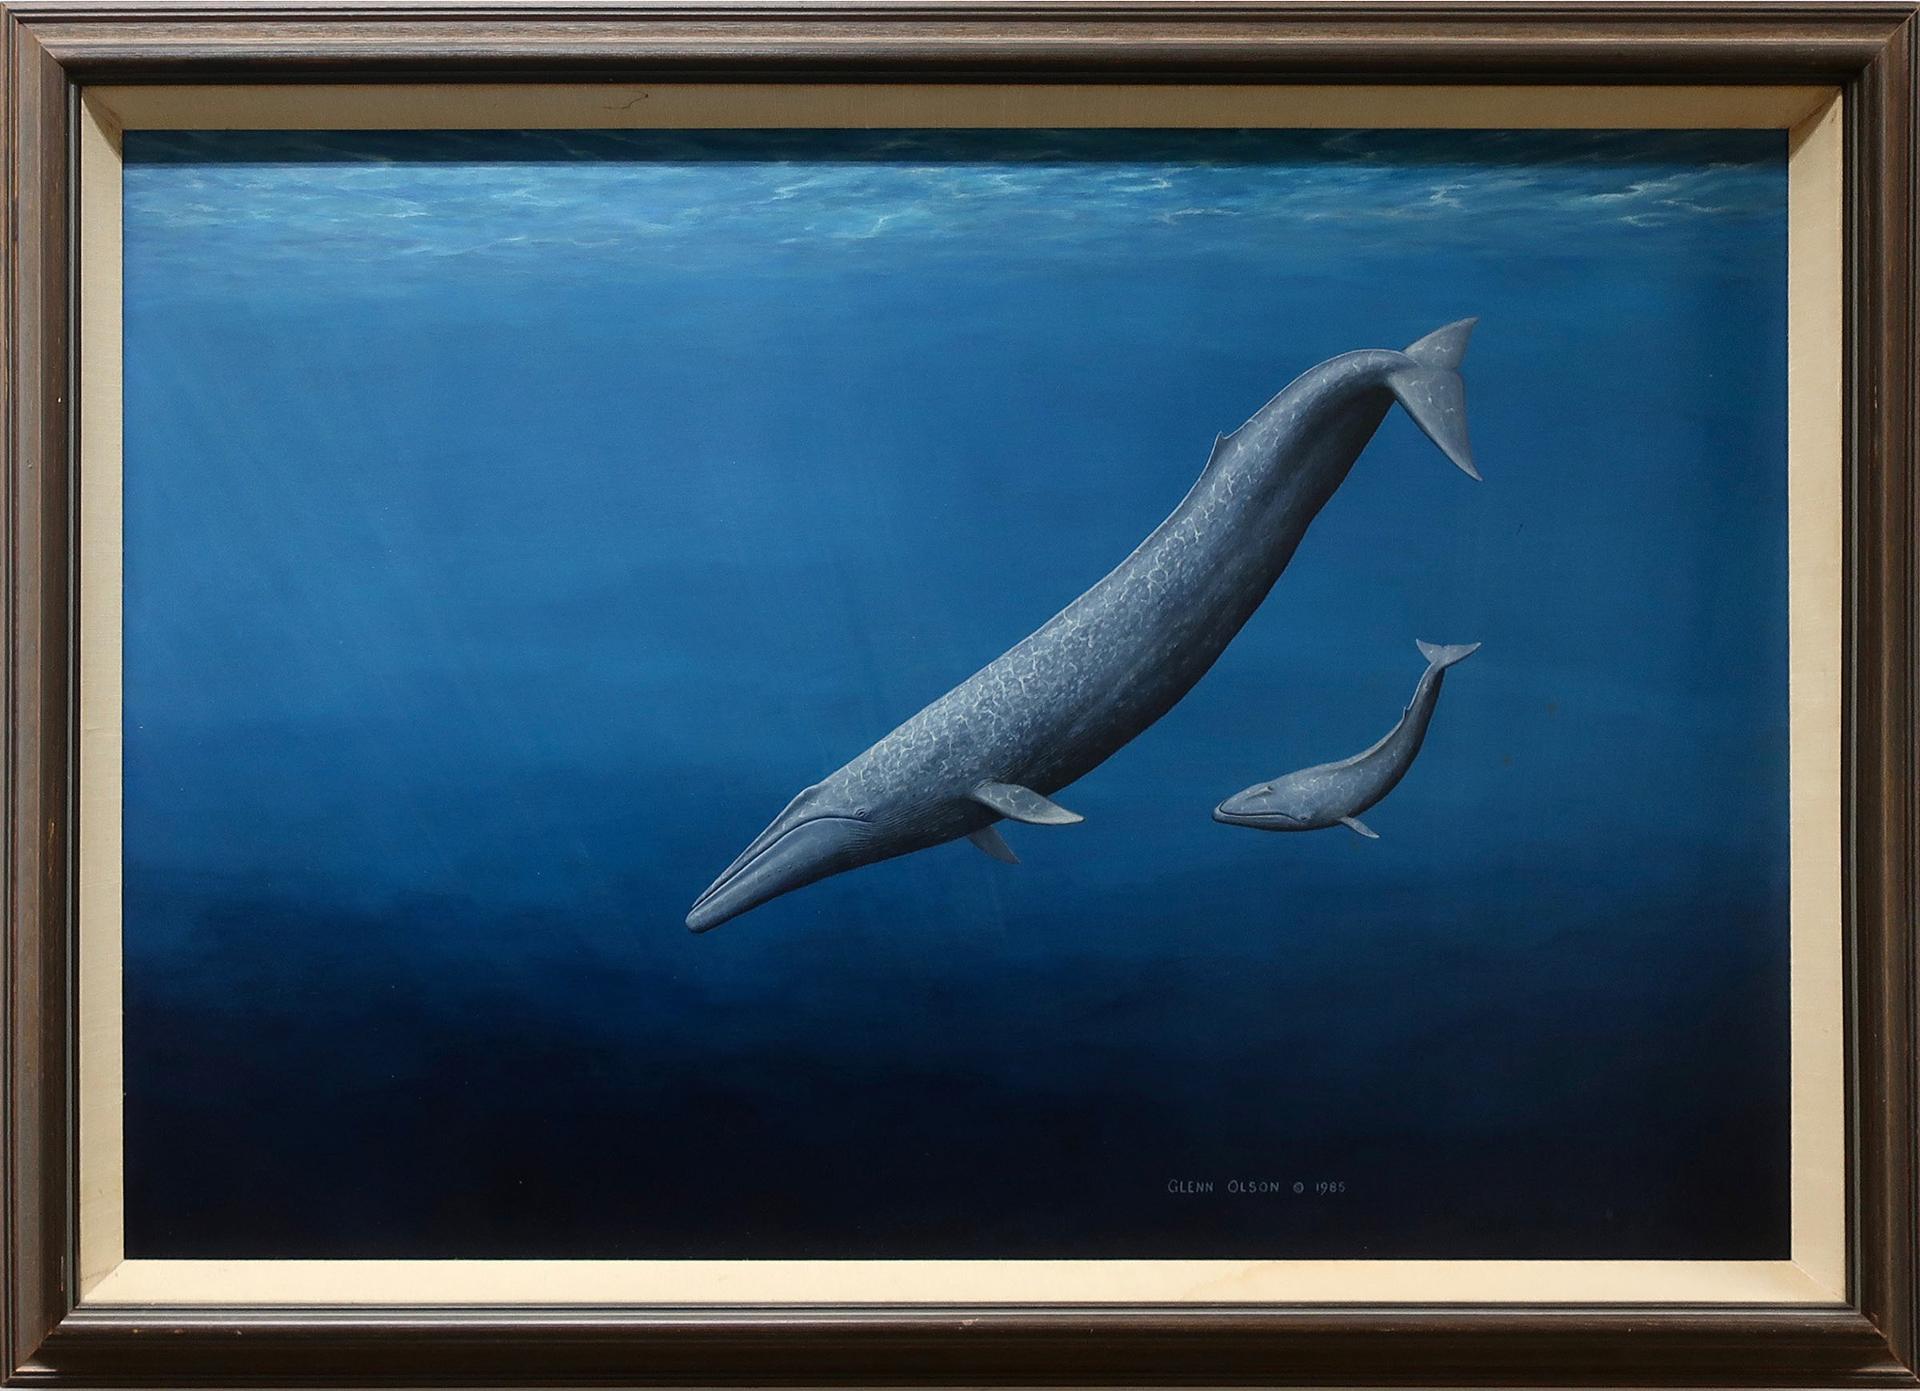 Glenn Olson (1945) - Untitled (Blue Whale With Calf)